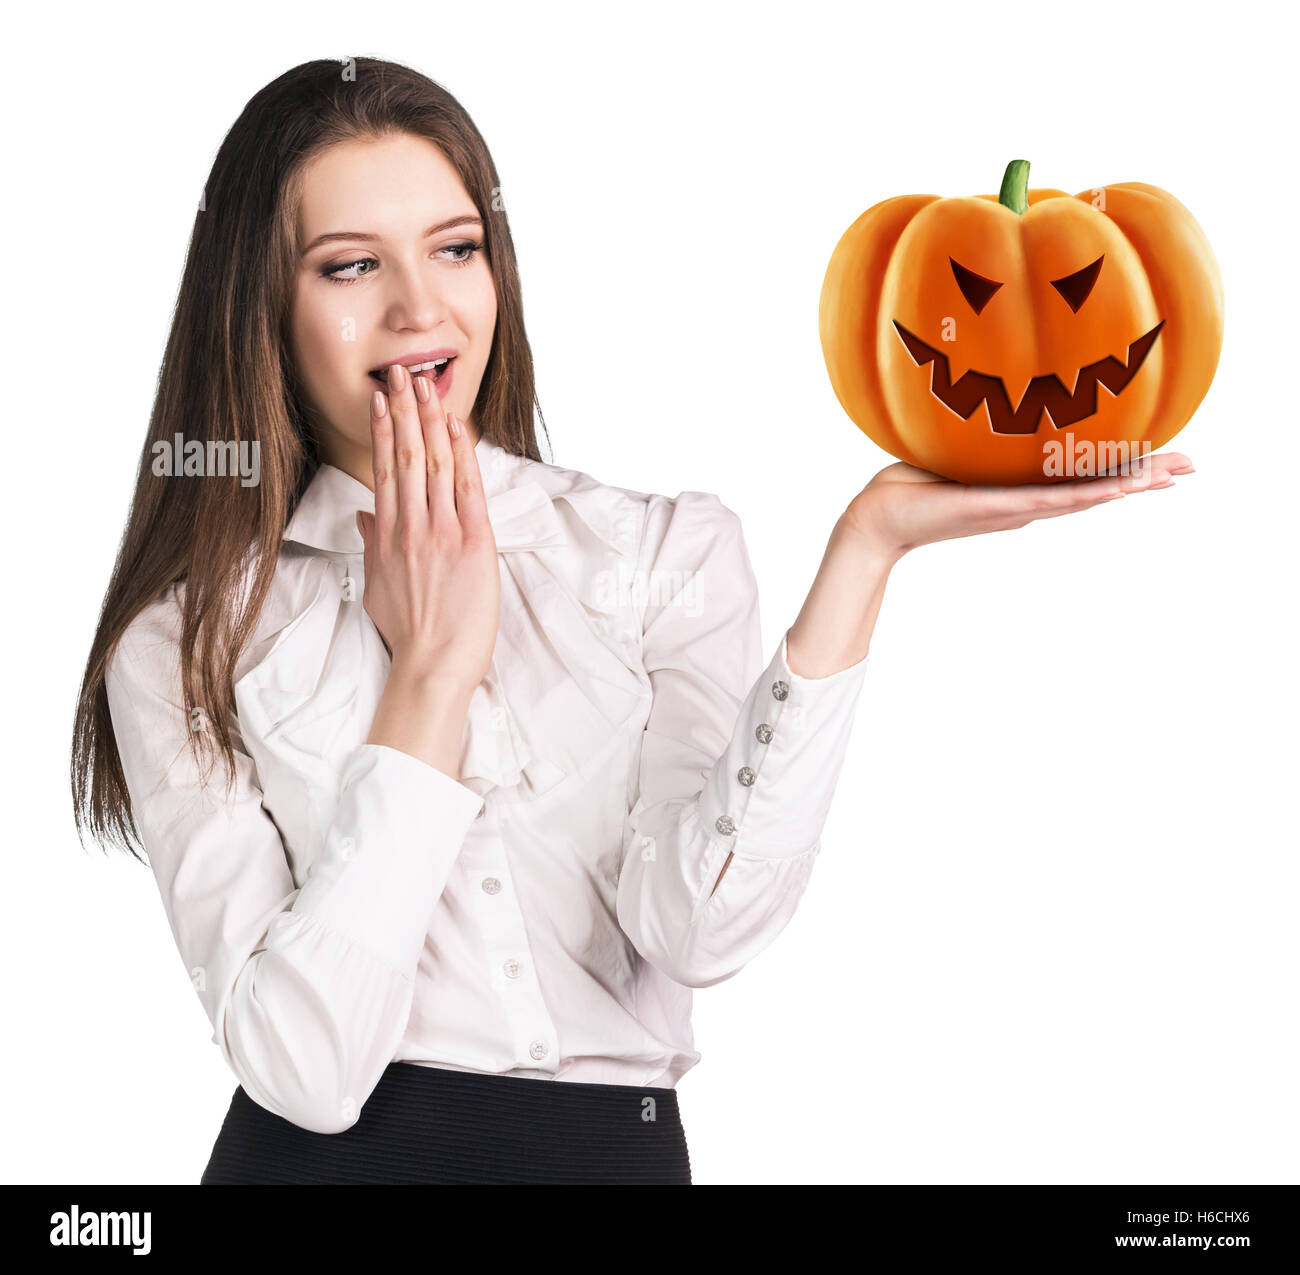 Surprised woman holding pumpkin Stock Photo - Alamy